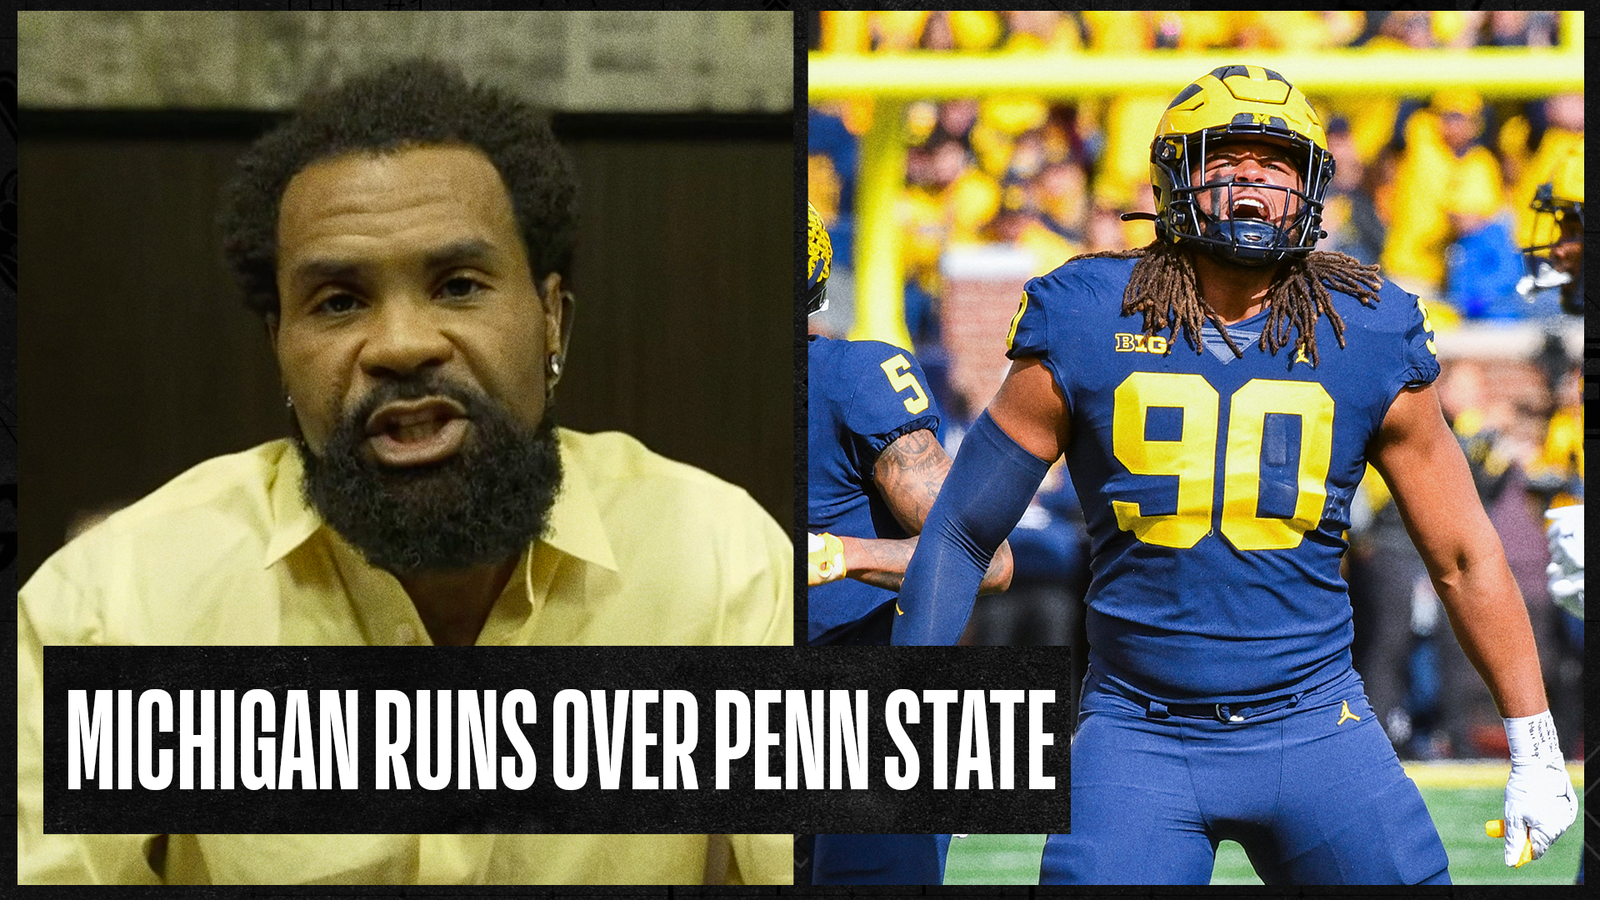 Michigan runs all over Penn State